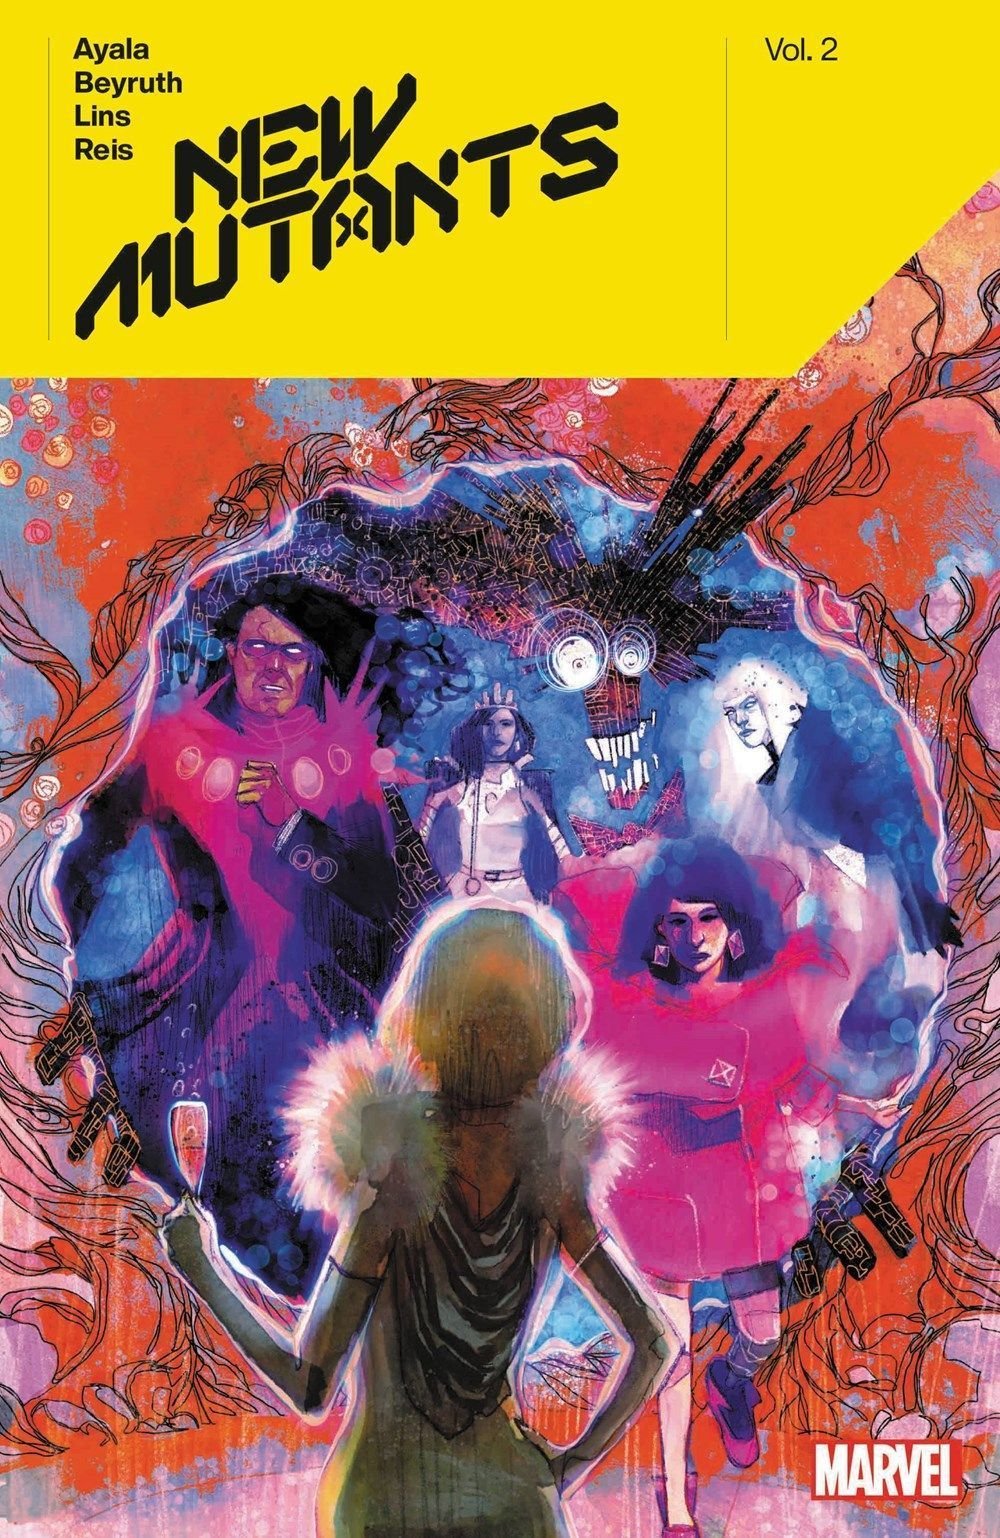 Buy New Mutants By Vita Ayala Vol. 2 by Vita Ayala With Free Delivery